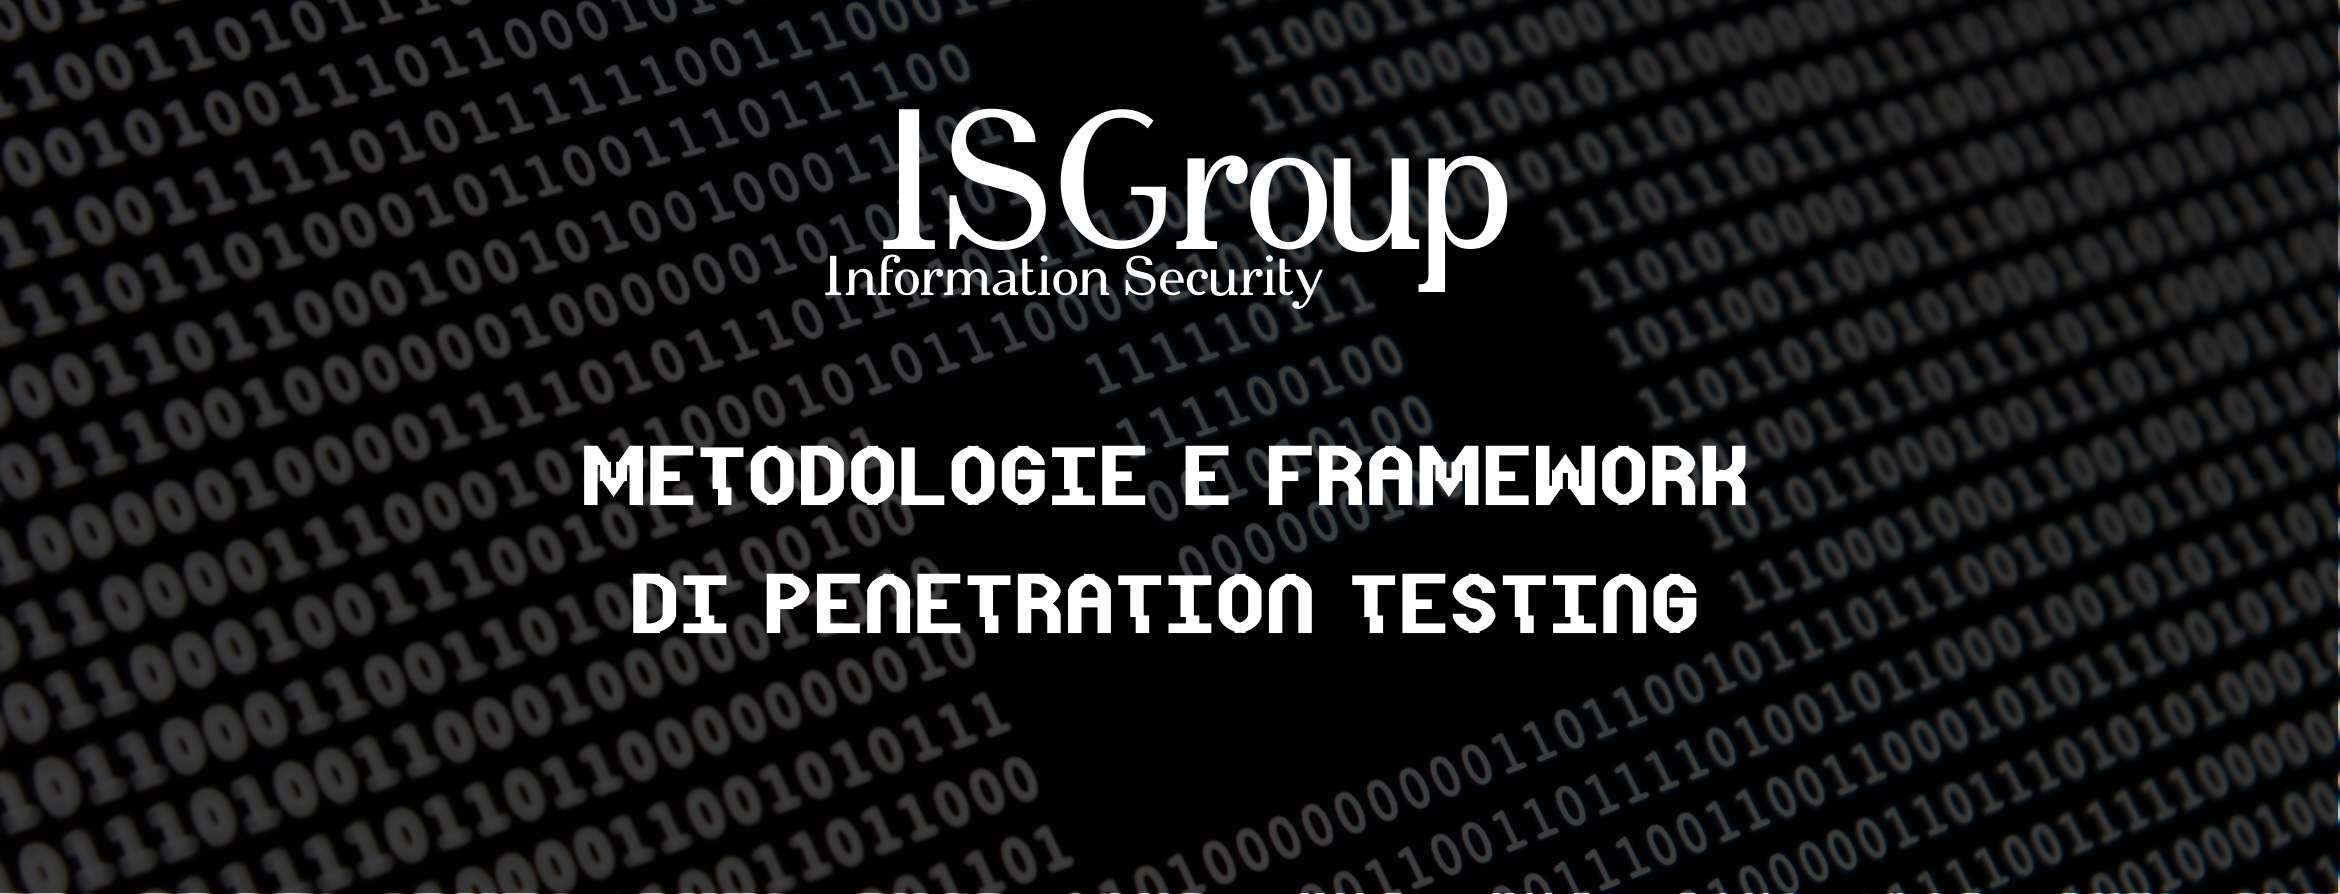 Metodologie e framework di Penetration Testing